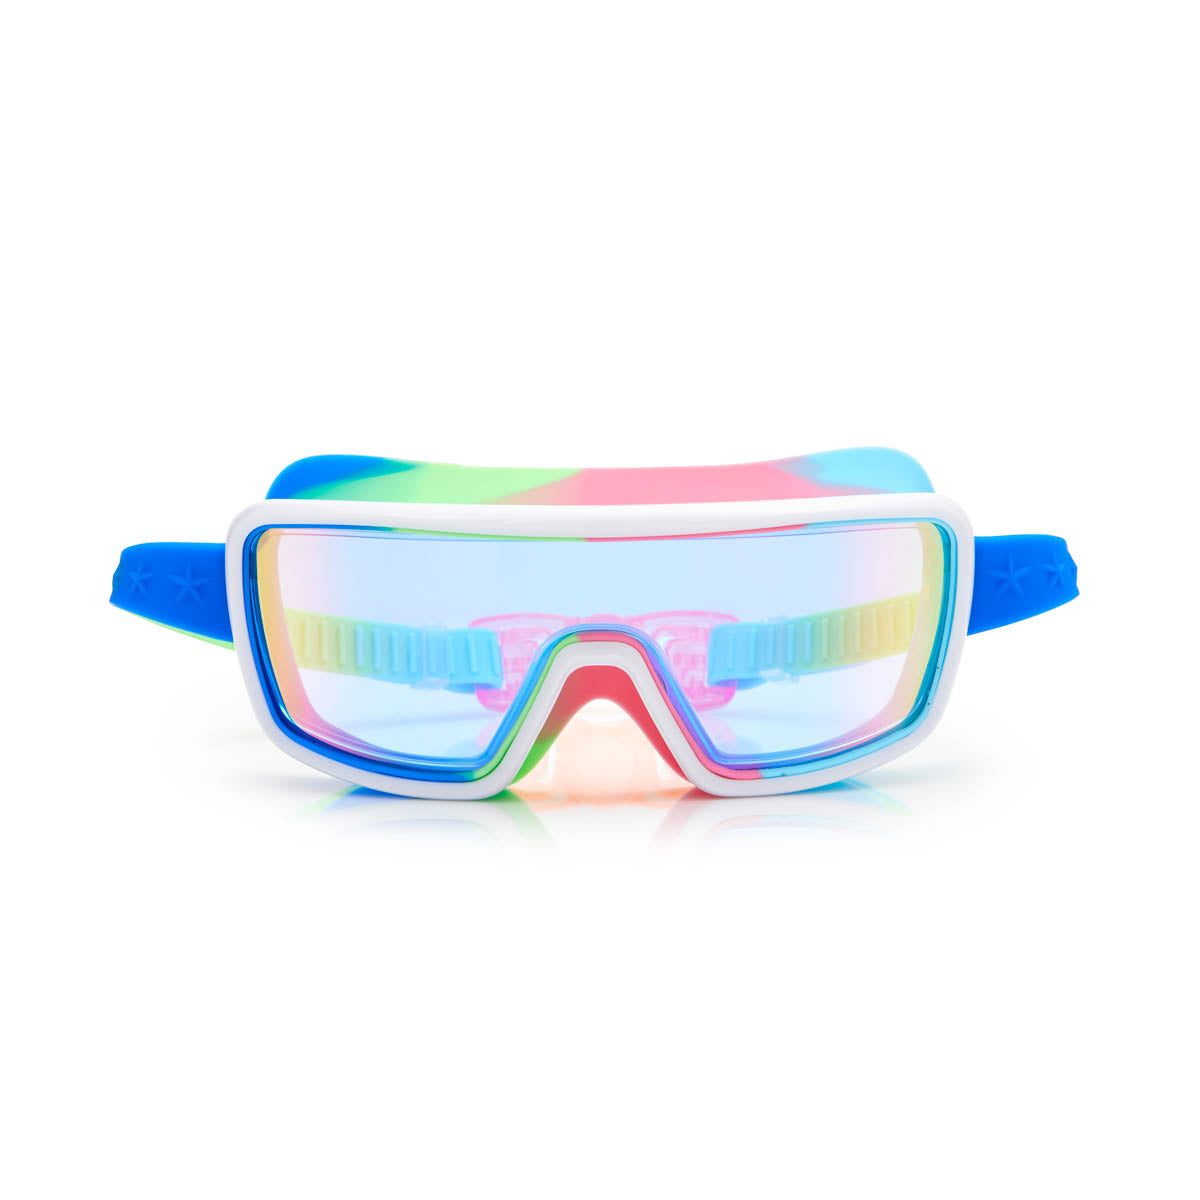 Gadget Green Prismatic Swim Goggles by Bling2o - HoneyBug 